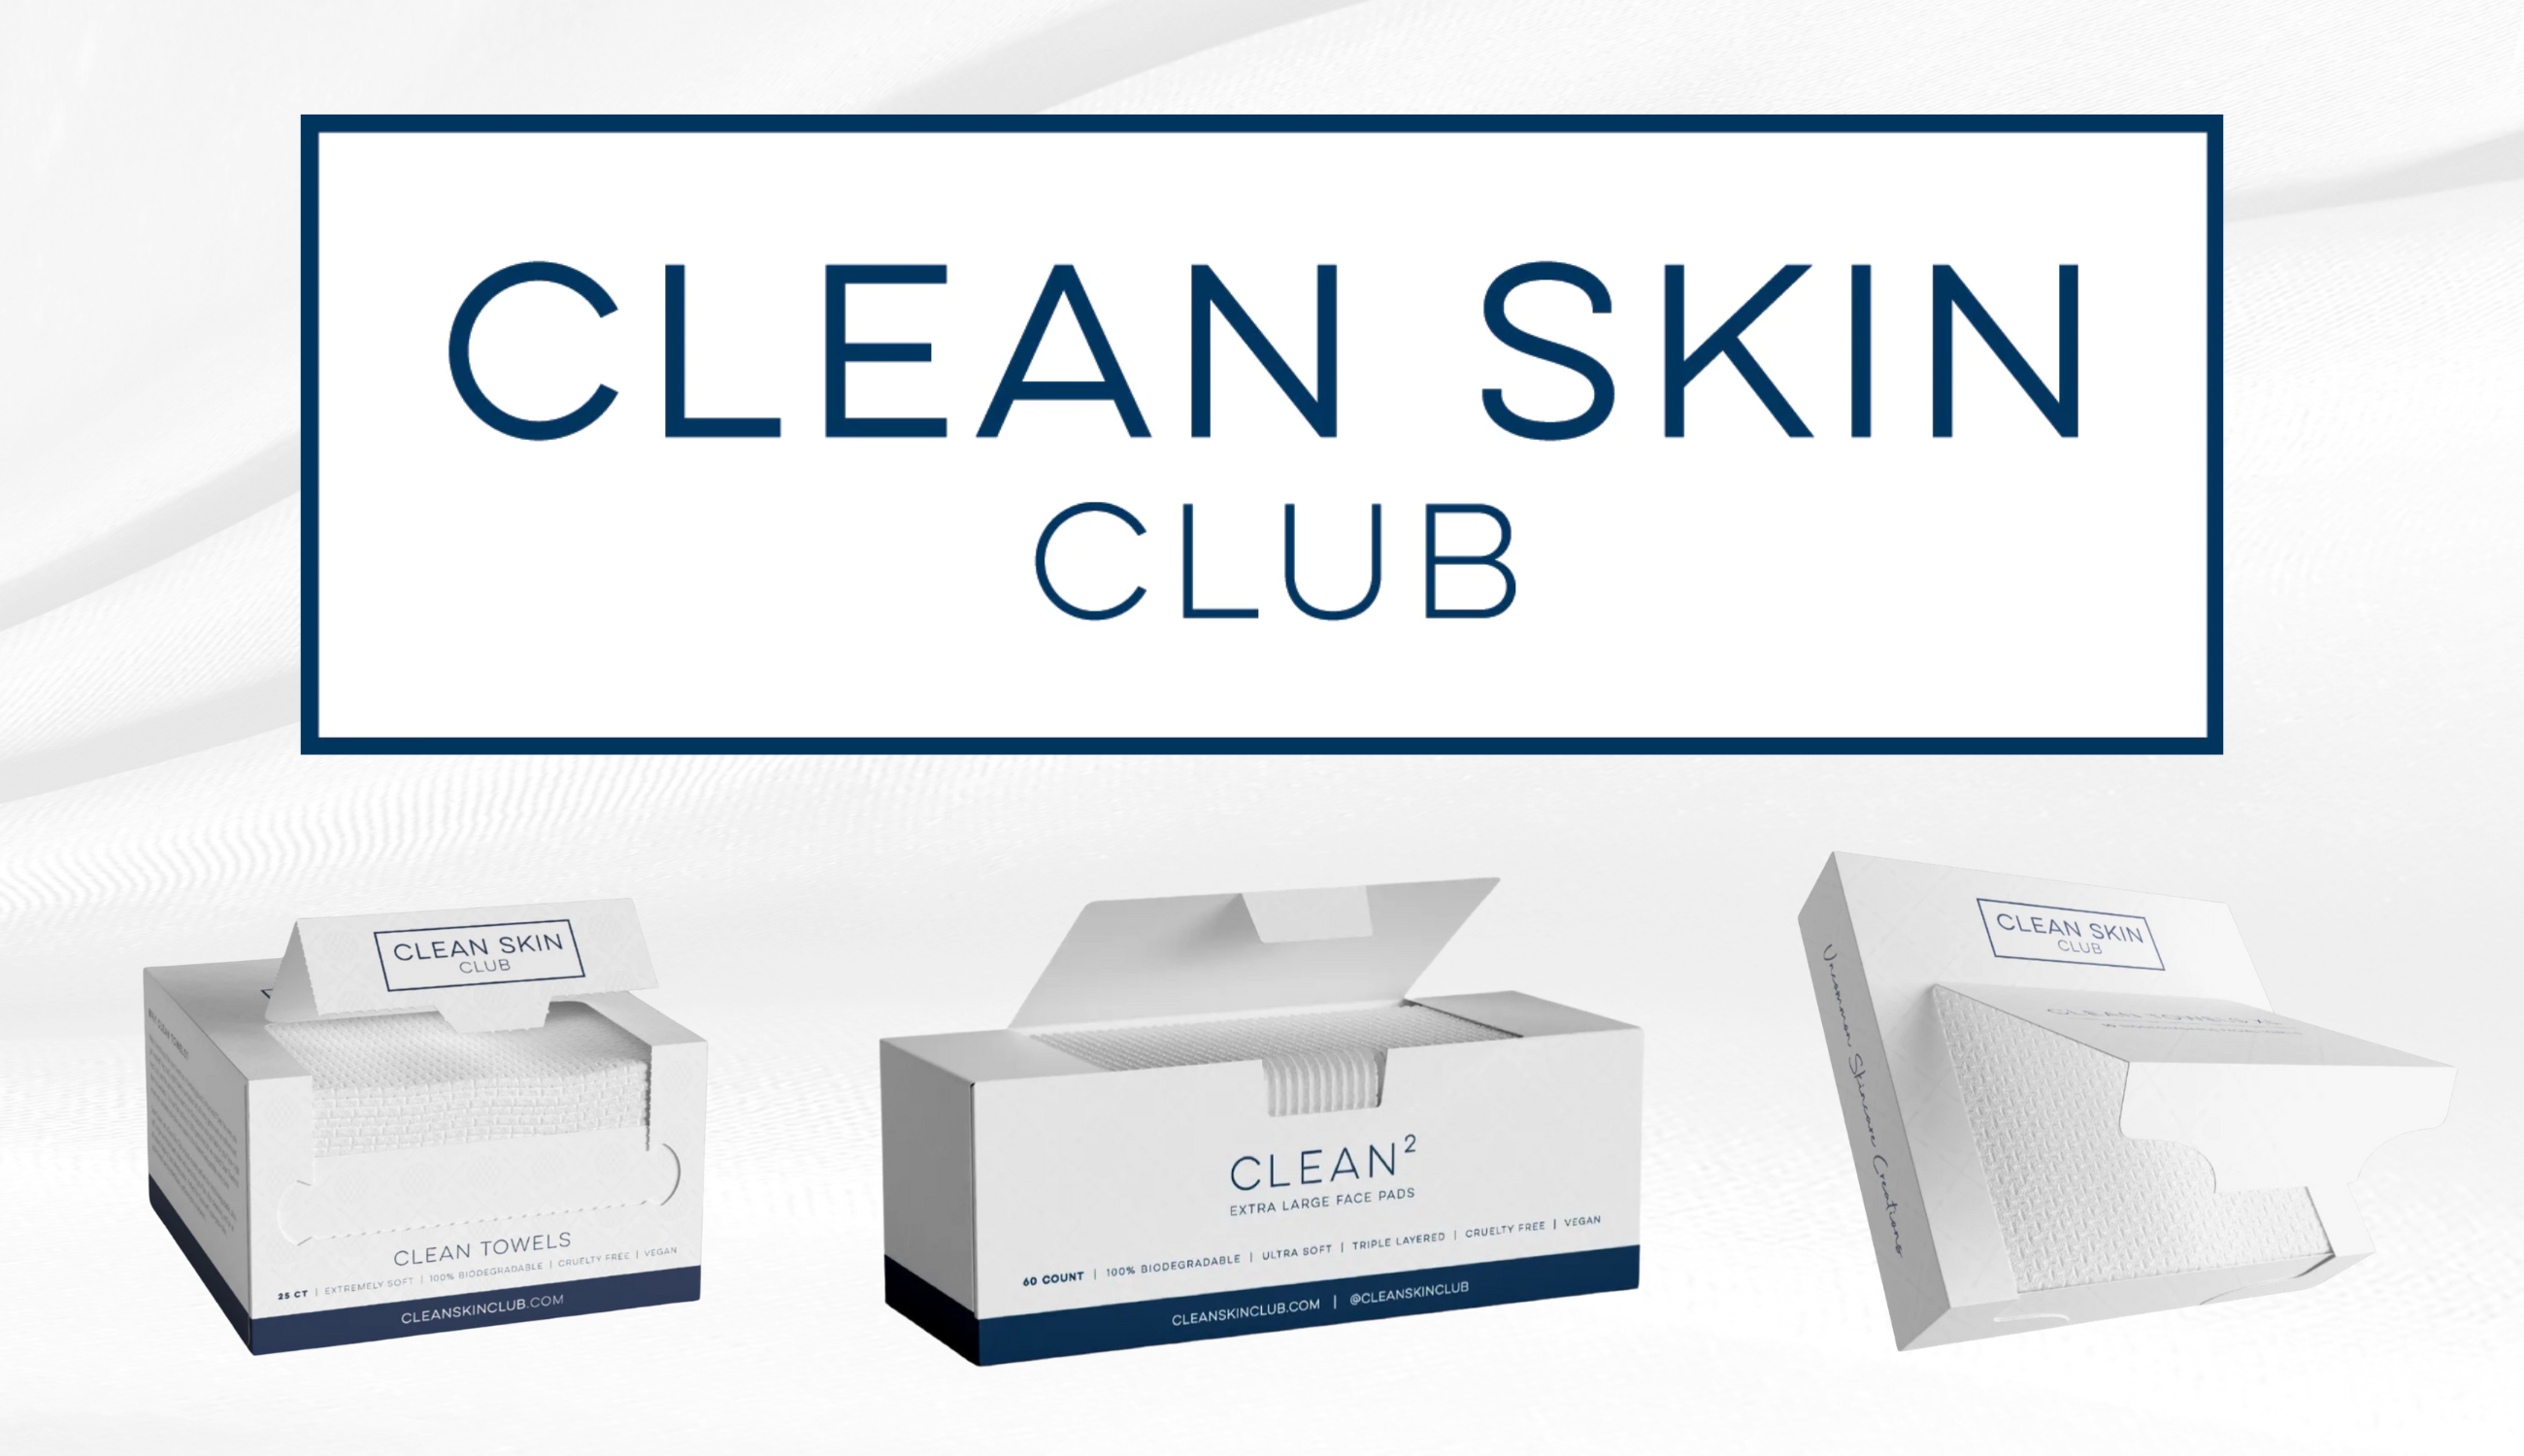 CLEAN SKIN CLUB